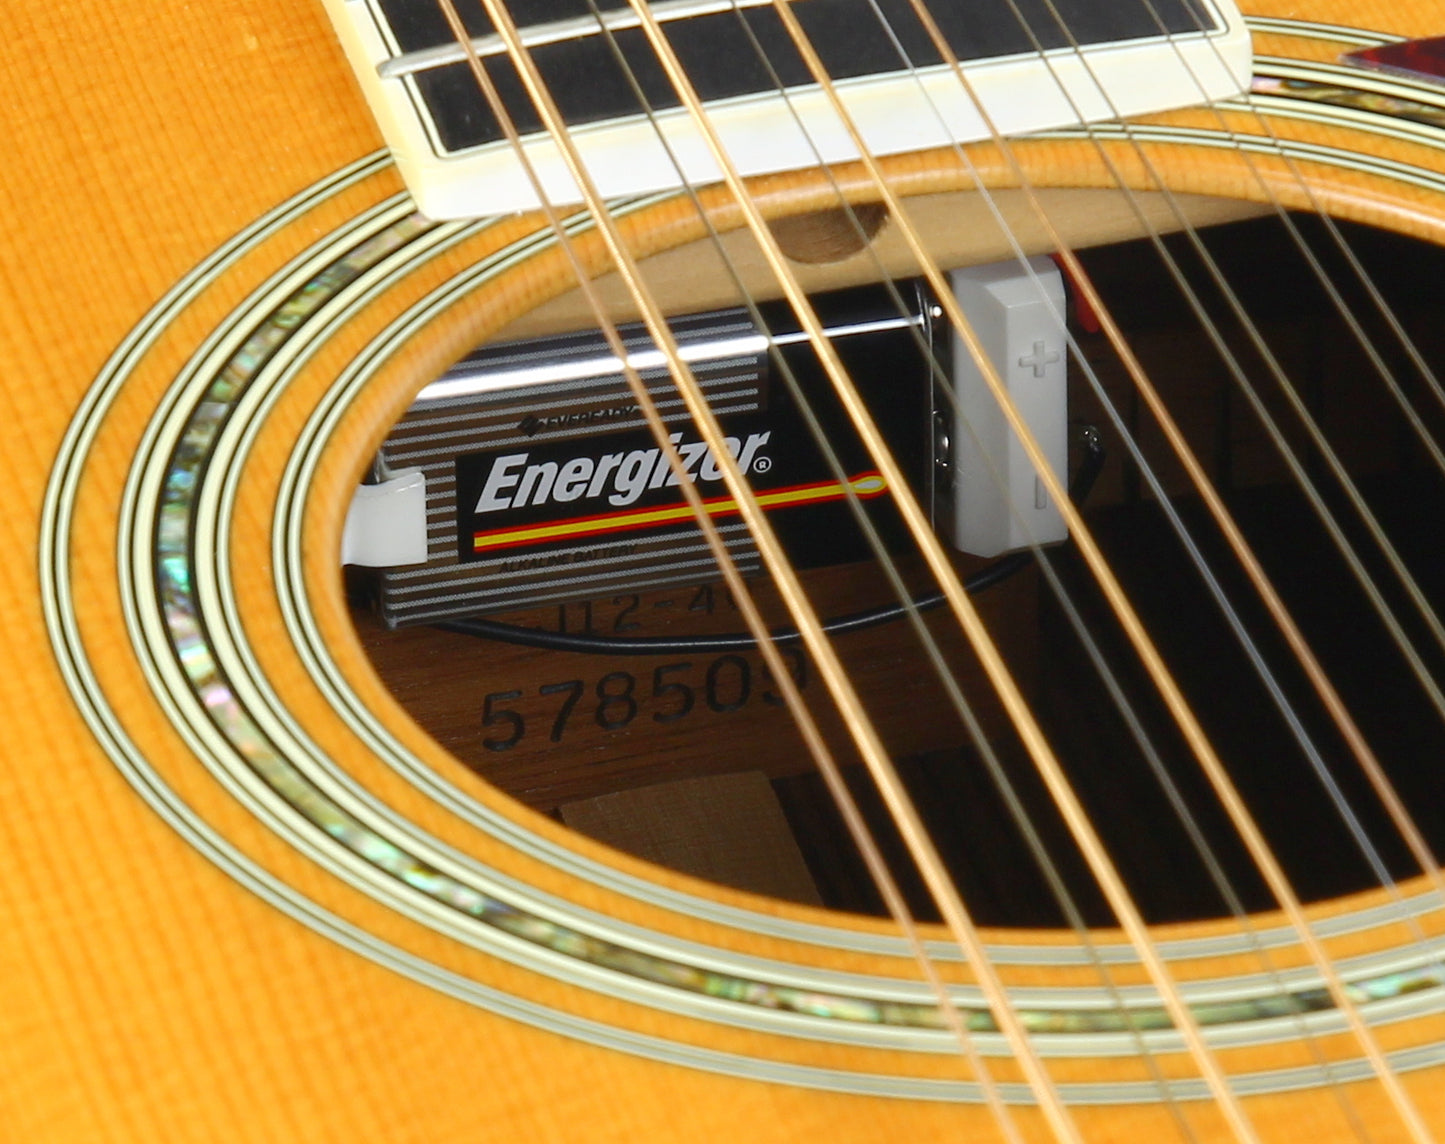 1996 Martin J12-40 Acoustic Jumbo Flat Top 12-String J-40 Guitar - Low Action, Sounds Amazing!